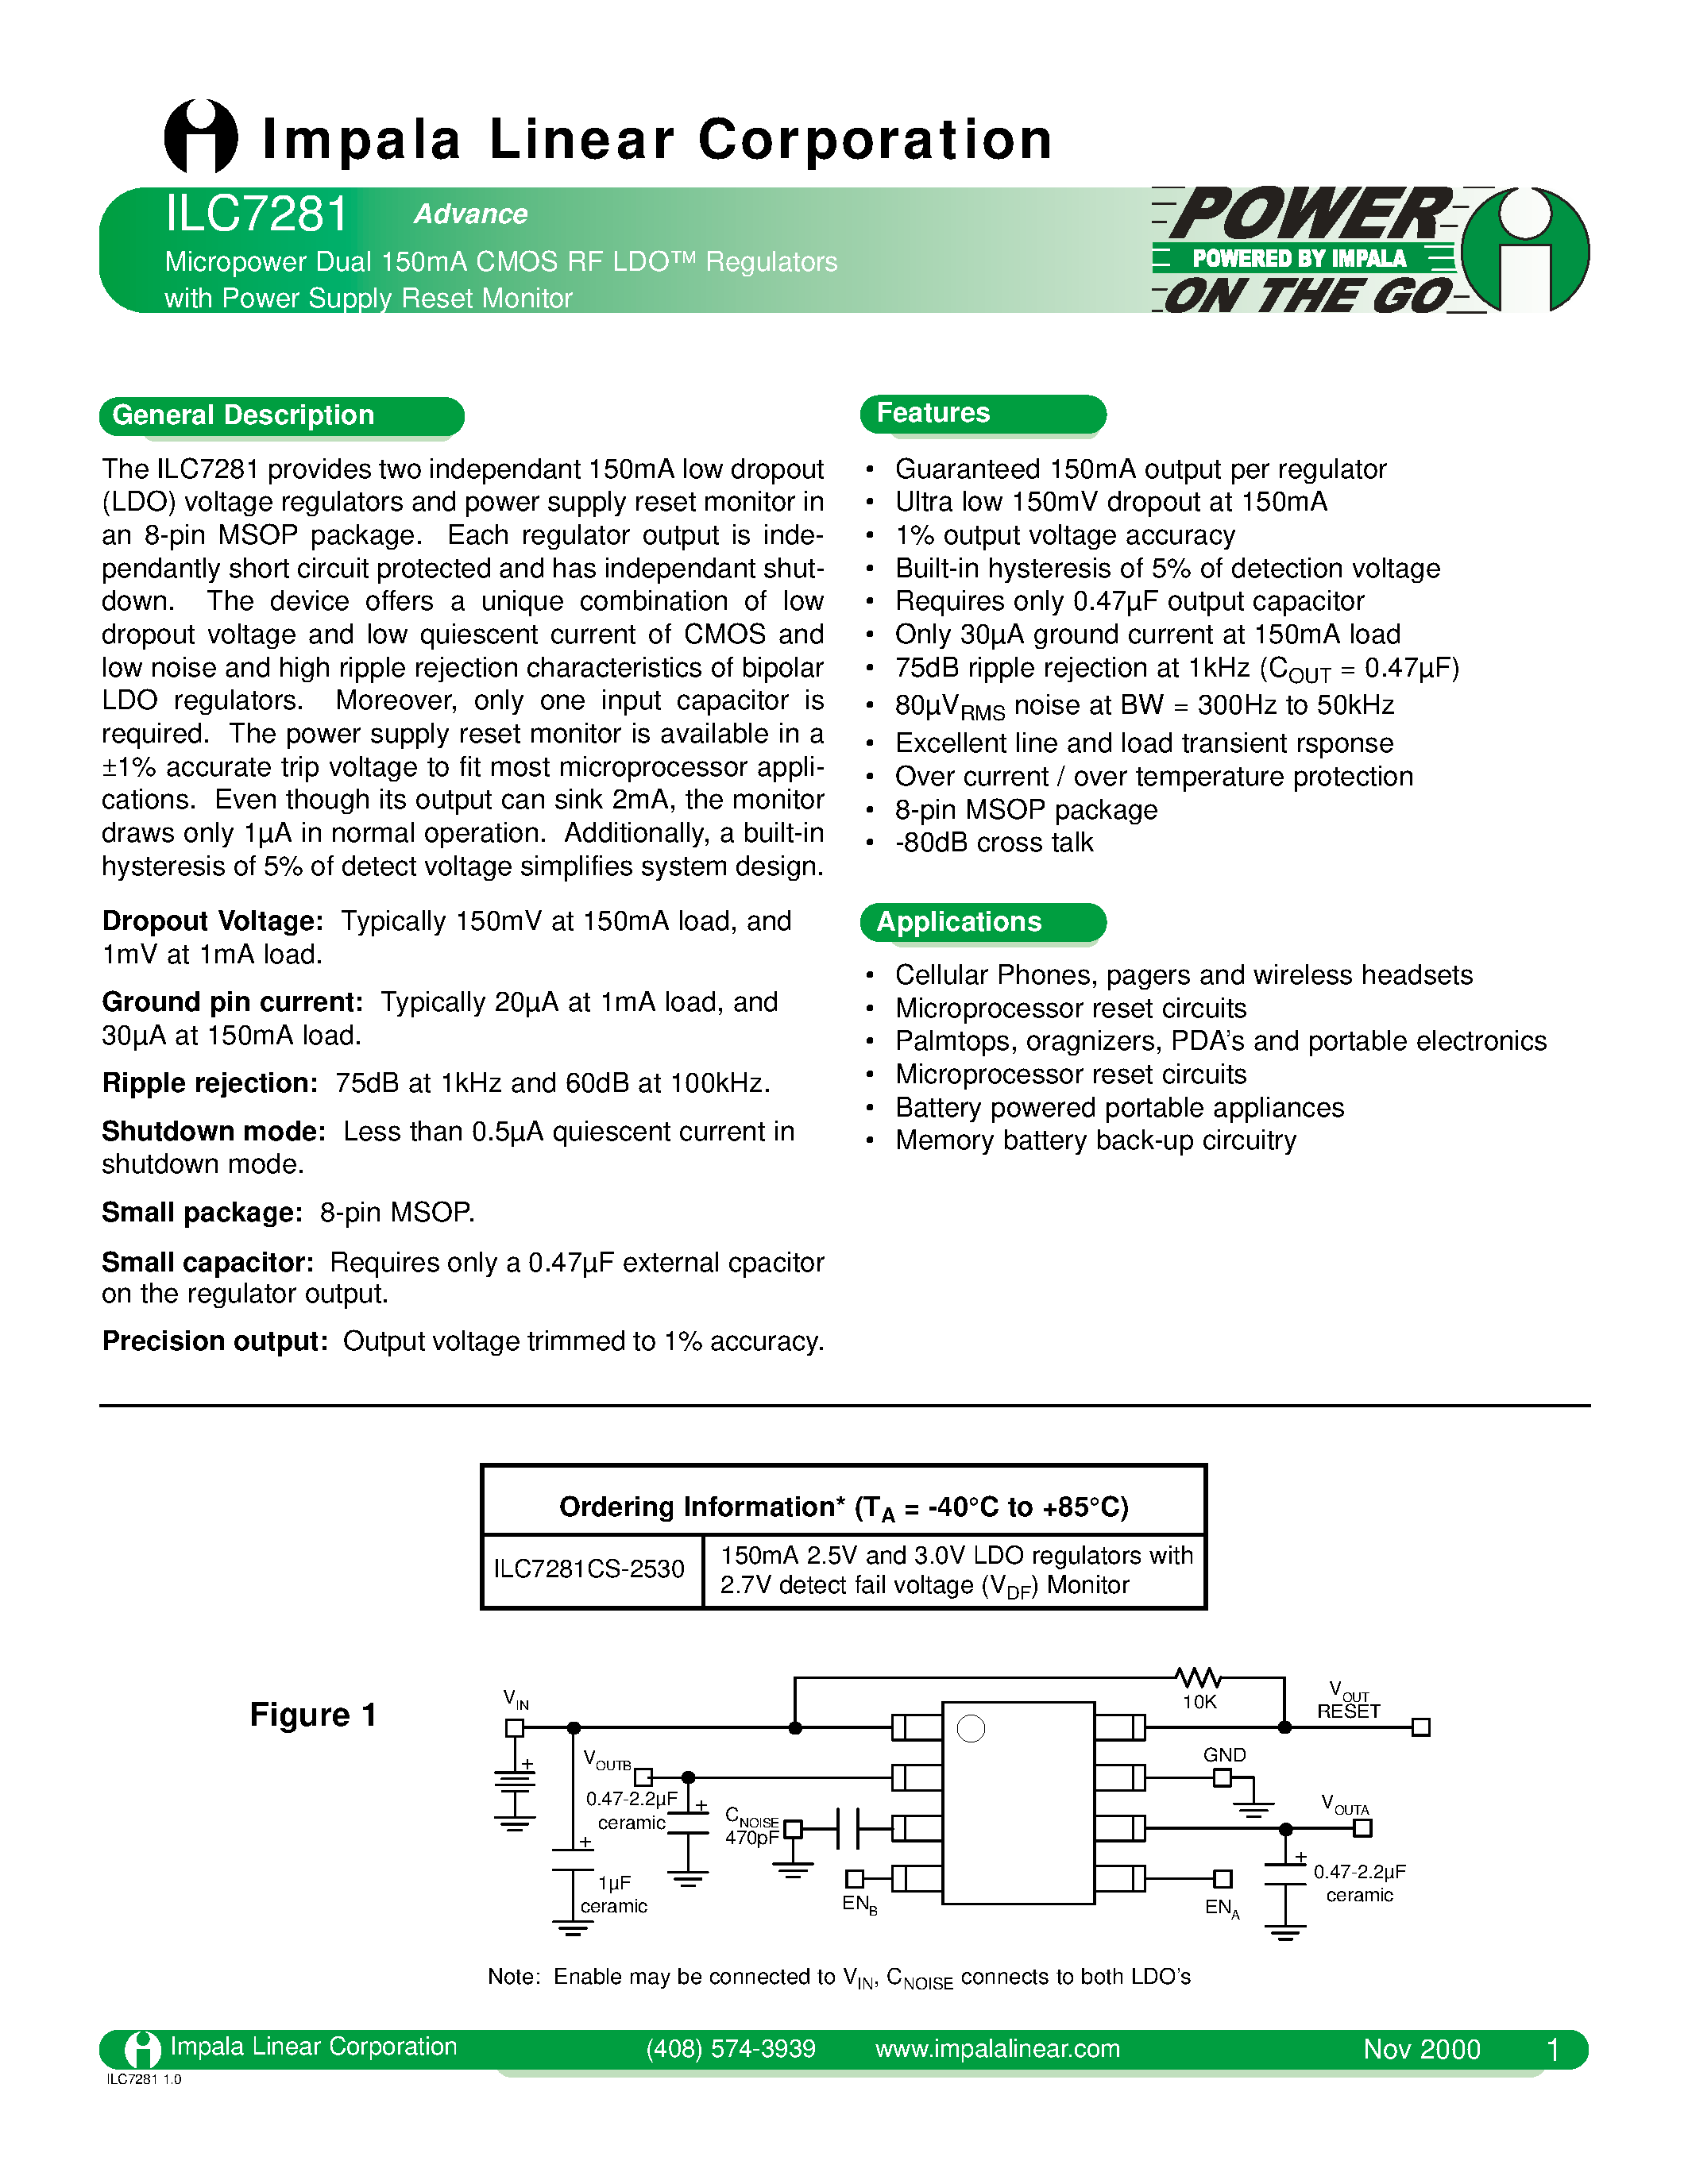 Даташит ILC7281CS-2530 - MICROPOWER DUAL 150MA CMOS RF LDO REGULATORS WITH POWER SUPPLY RESET MONITOR страница 1